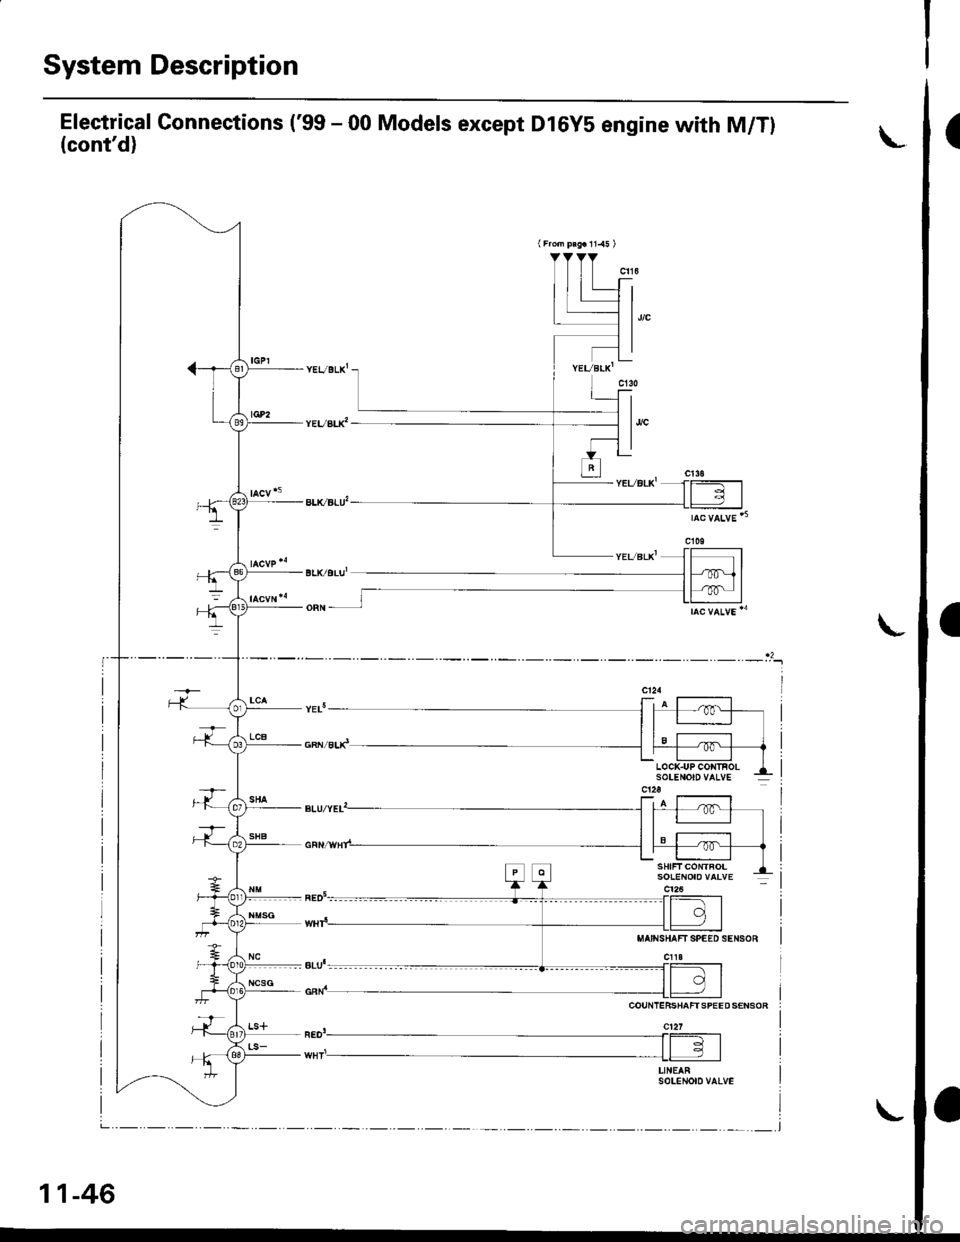 HONDA CIVIC 1997 6.G Owners Manual System Description
Electrical Connections (99 - 00 Models except Dl6Y5 engine with M/Tl
(contd)
cl09
racvP*{- BLK/eLu-lqt
pl
MAINSHAFT SPEEO SENSOR
clla
COUNIERSHAFTSPEED SENSOR
c121
tt I I
UNEARSO